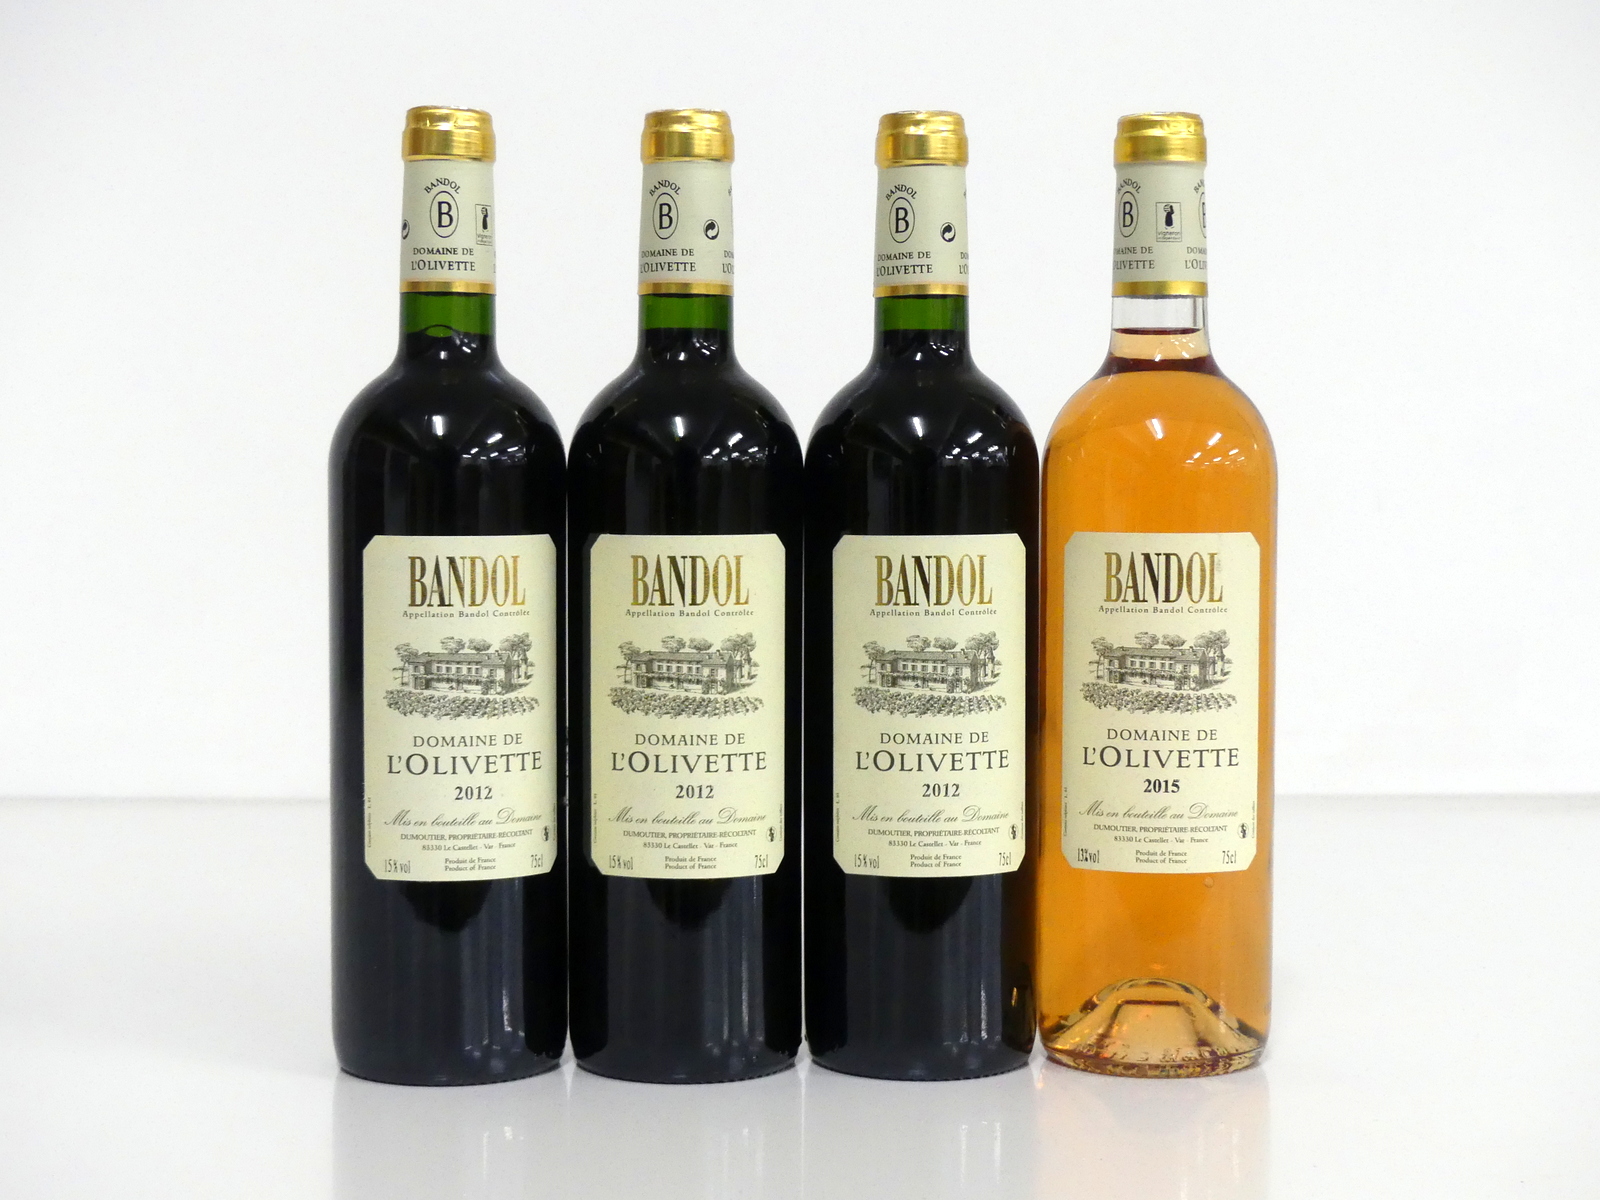 3 bts Dom de L'Olivette Bandol (rouge) 2012 1 bt Dom de L'Olivette Bandol (rosé) 2015 Above 4